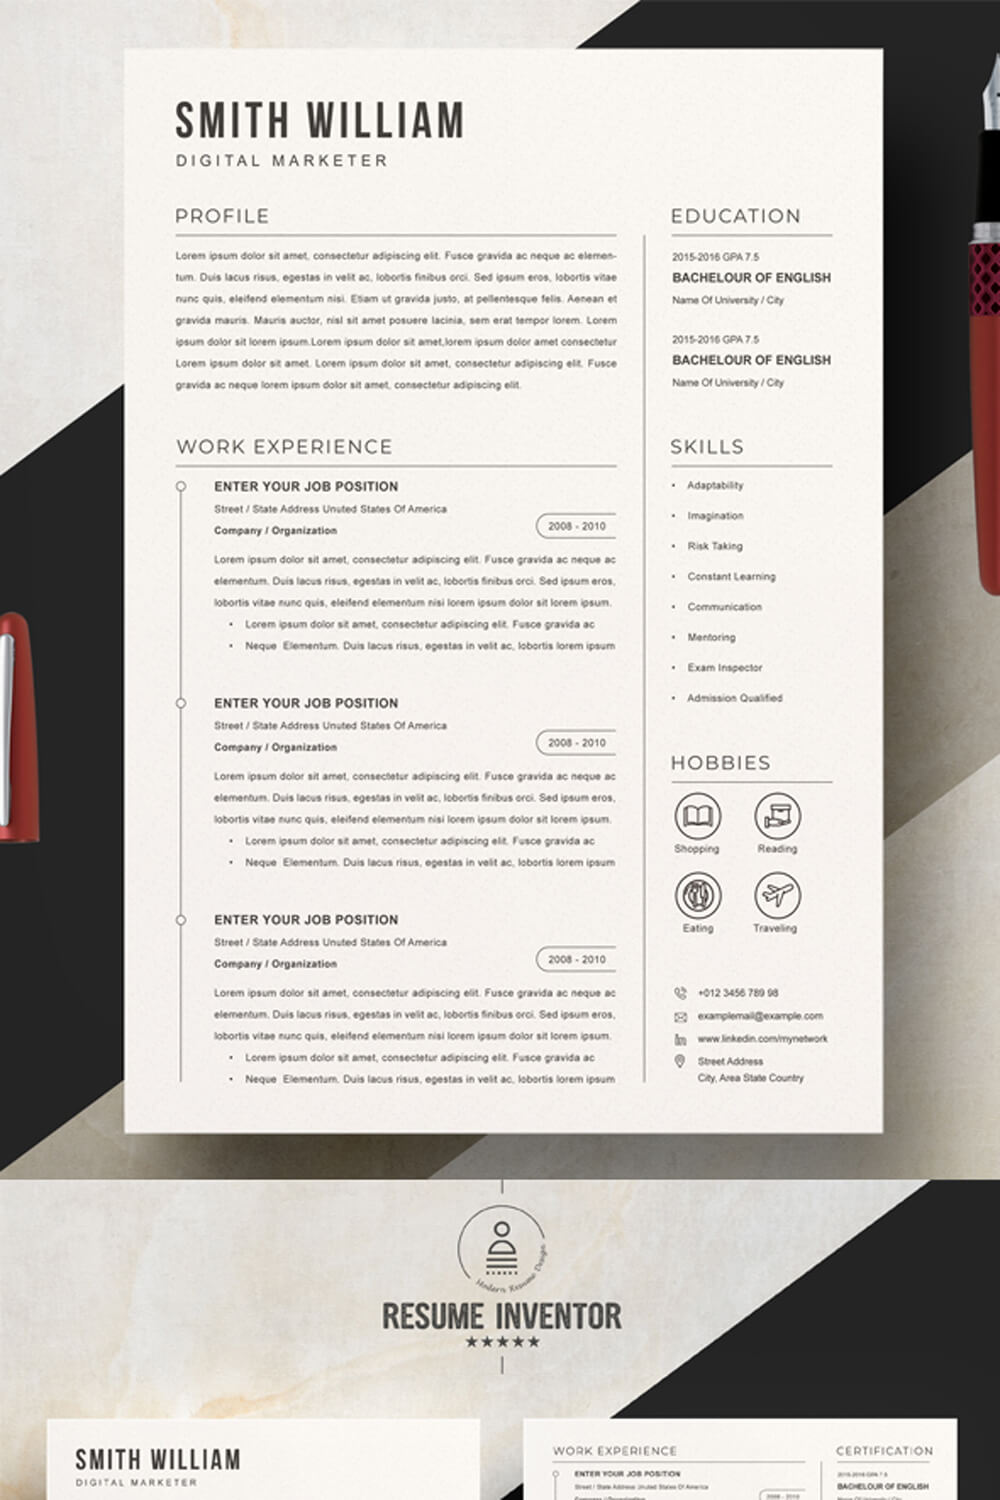 Digital Marketer CV & Resume Template | Modern Resume Template Word Format pinterest preview image.